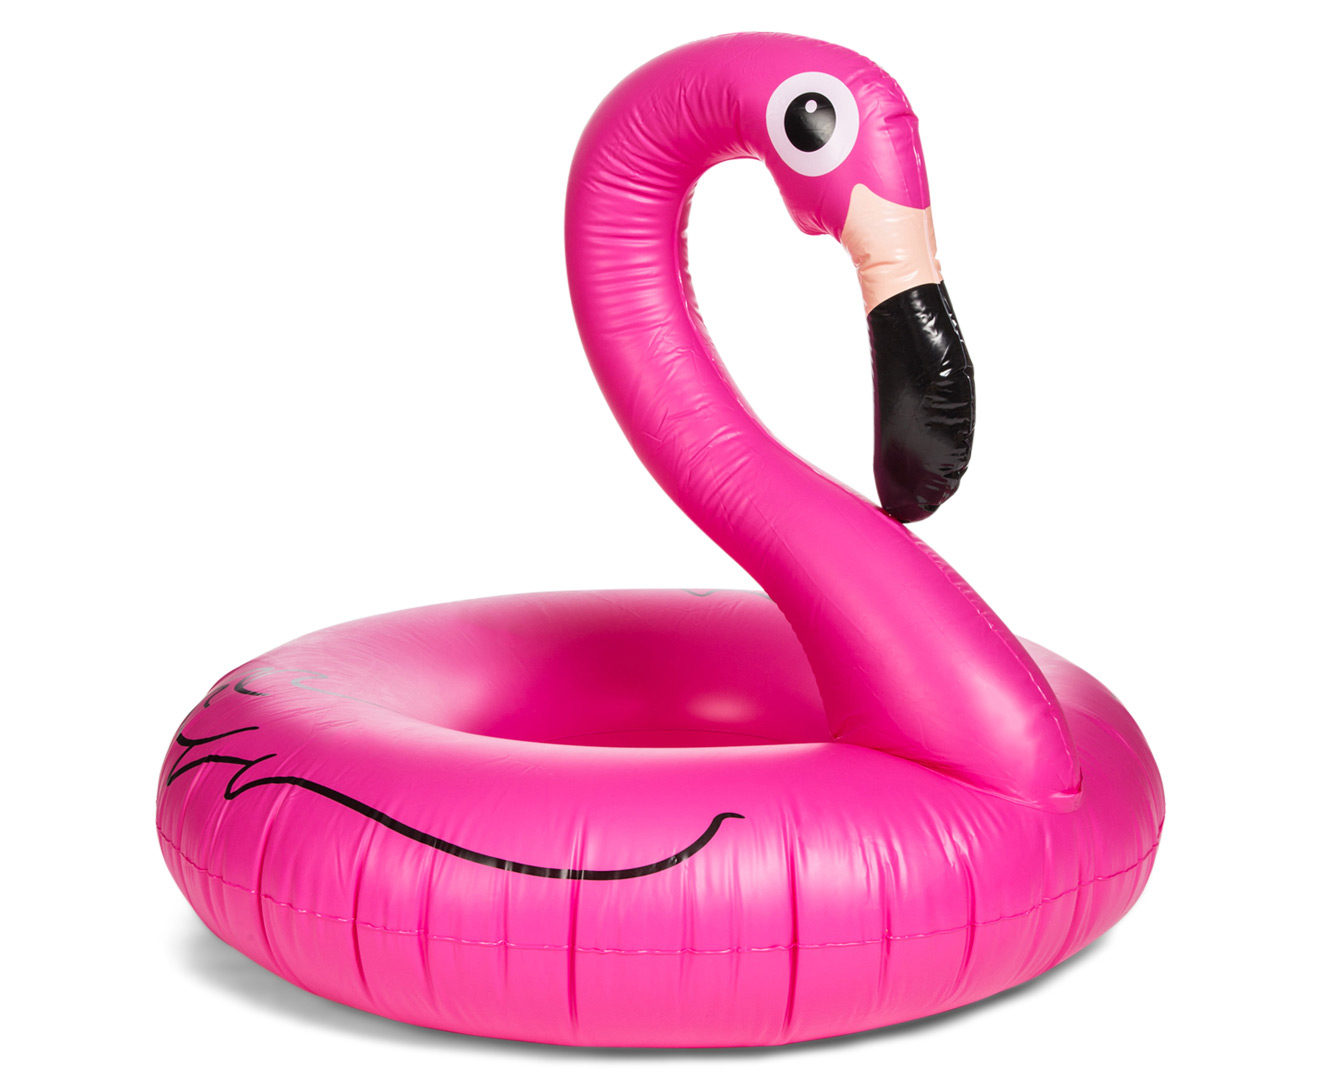 Giant Pink Flamingo Pool Float - Pink | eBay